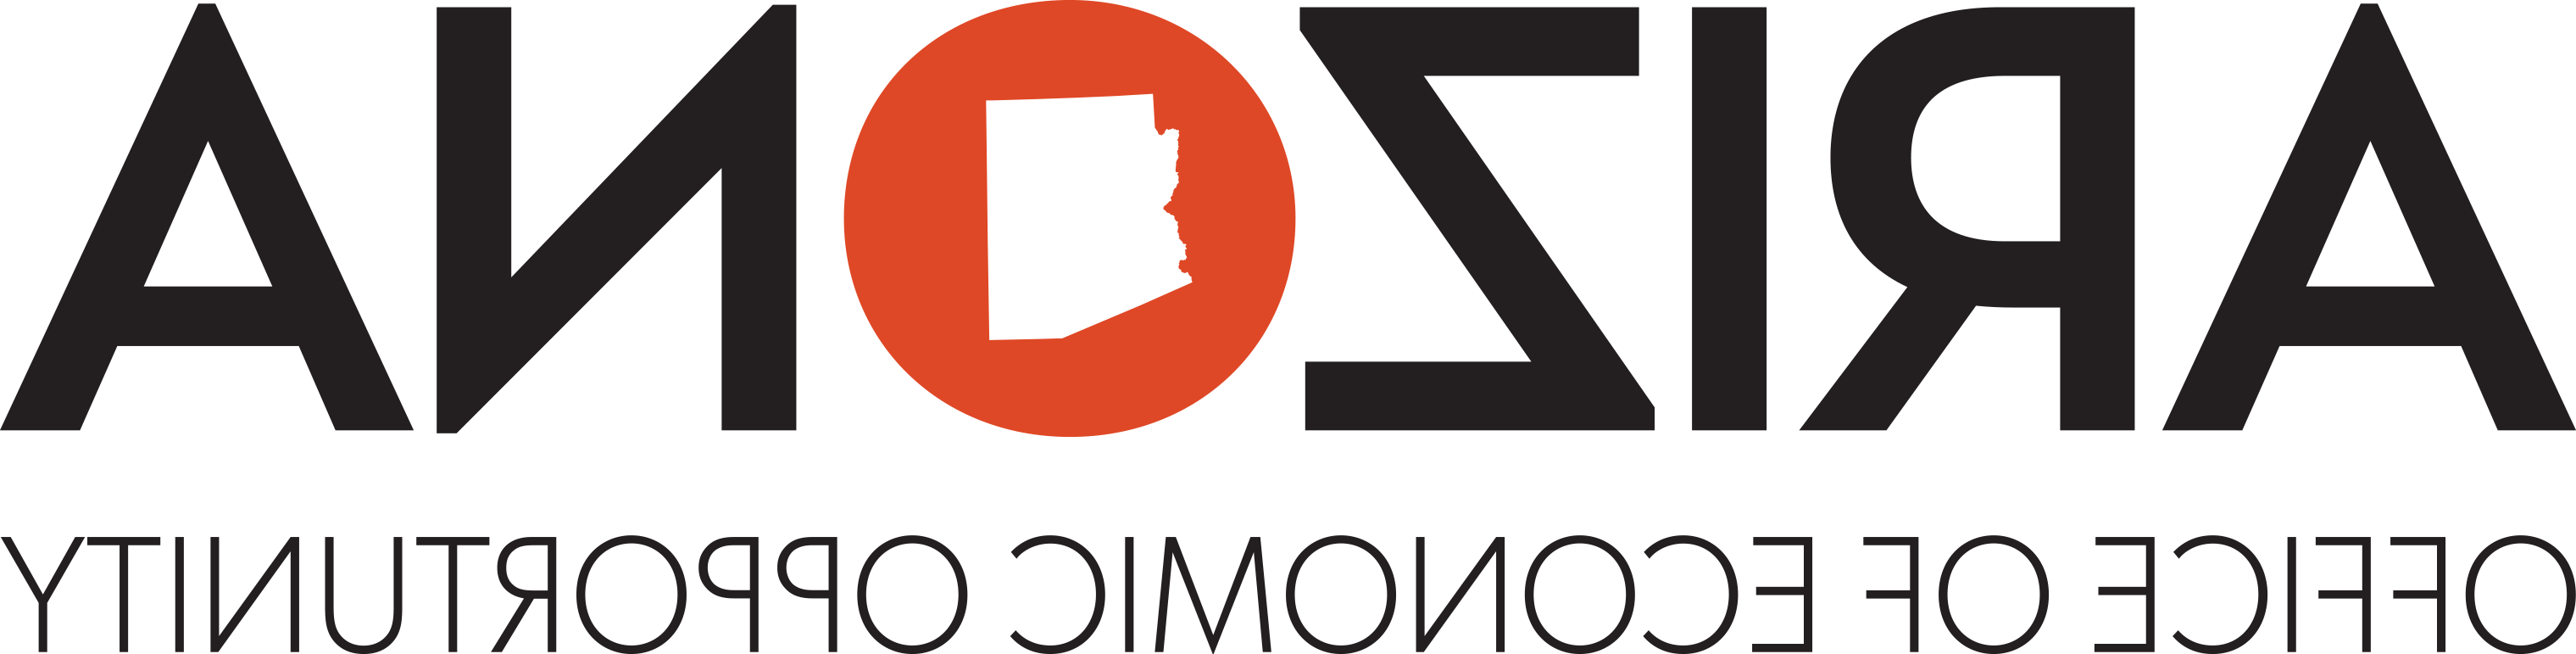 Arizona Office of Economic Opportunity logo